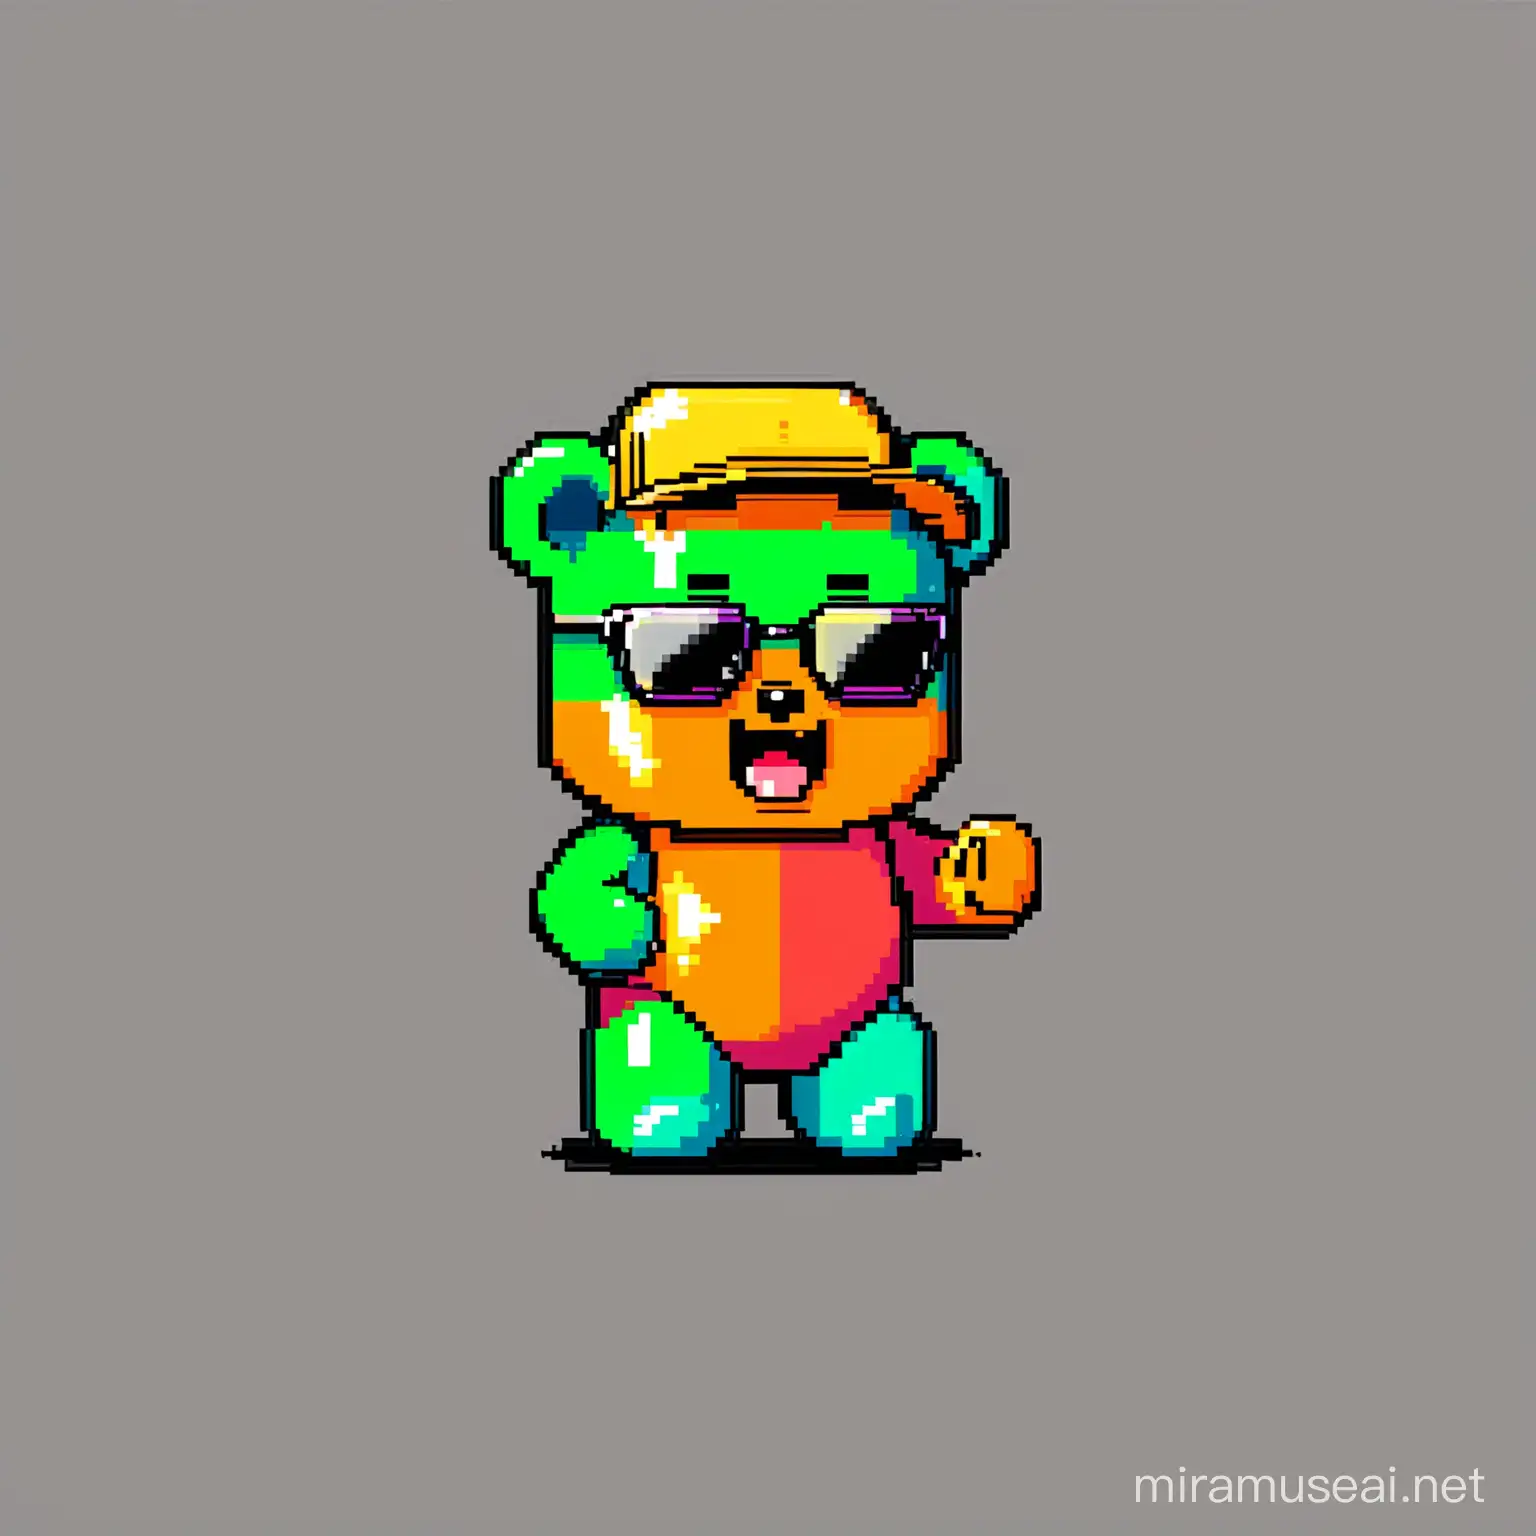 Funny and raandom colored 8 Bit solo gummy bear Mascot for Crypto Meme Token. Random accessories like cap or sunglasses